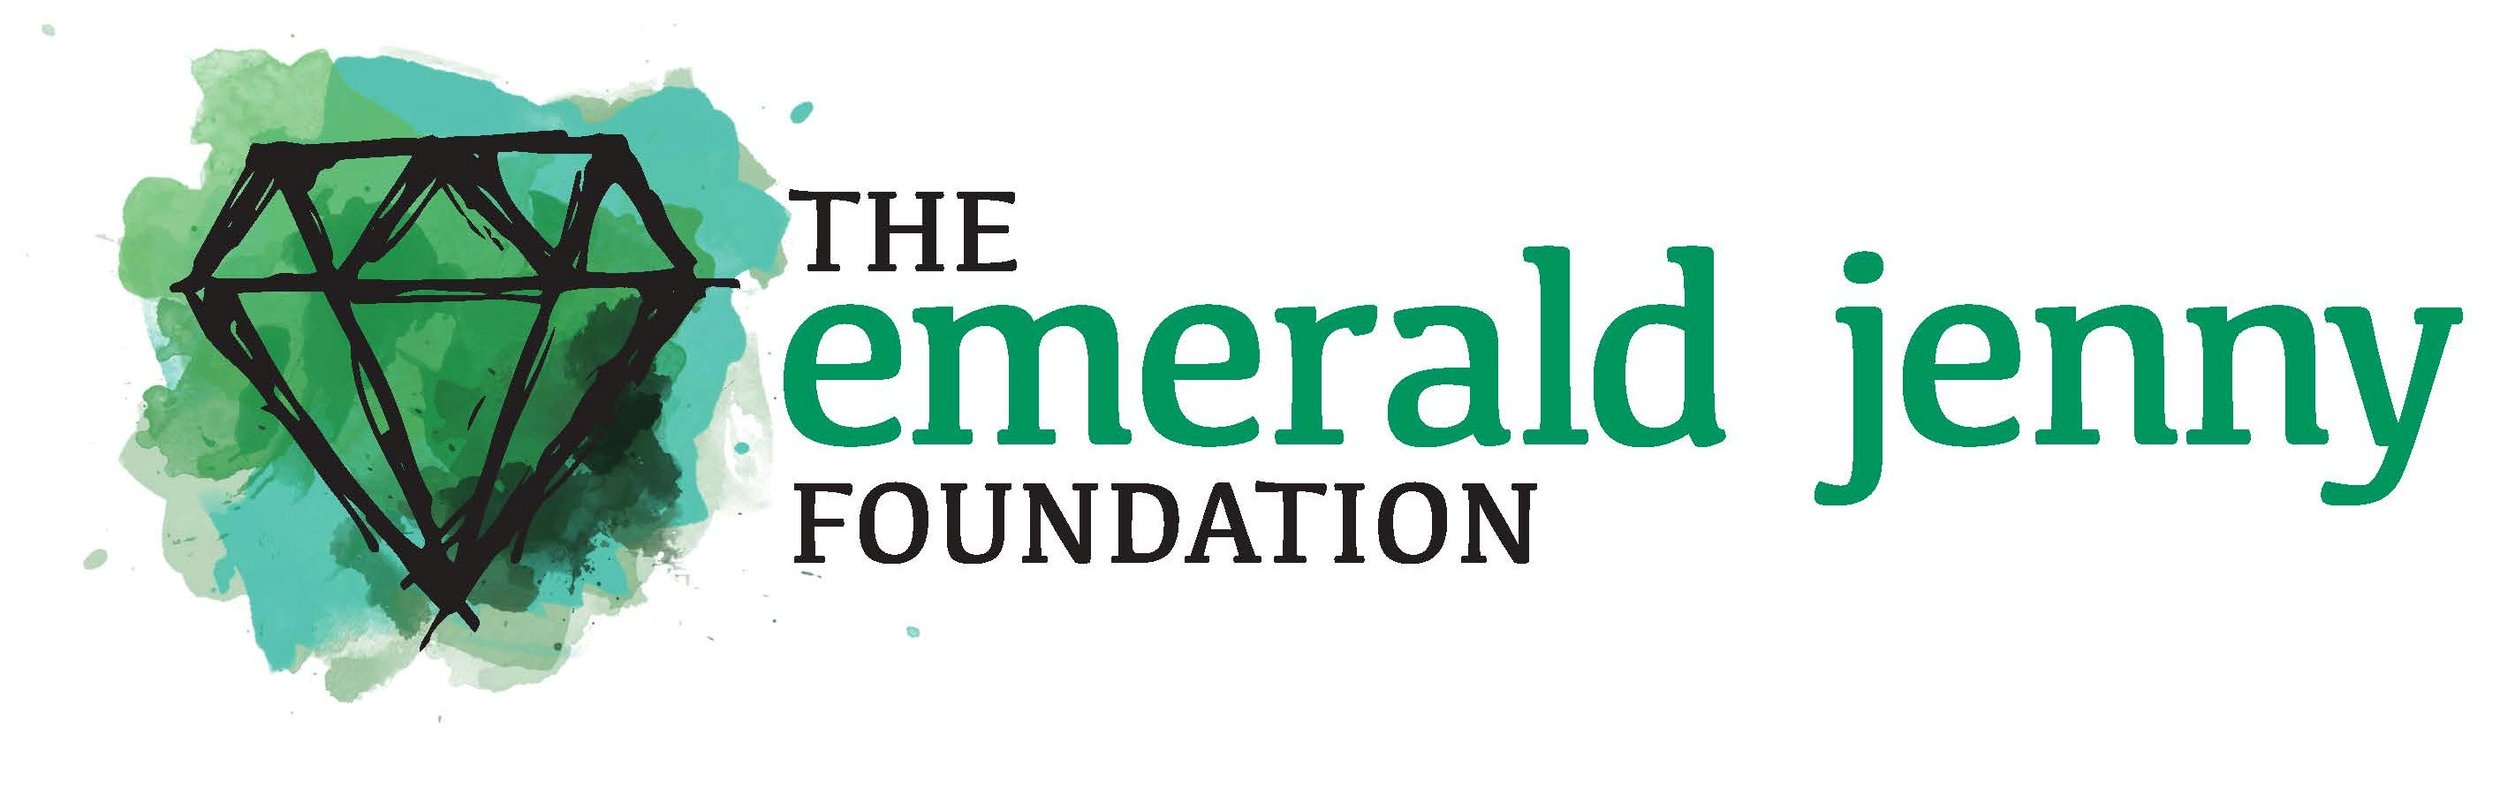 EmeraldJennyFoundation-Logo-02.27.17-1 - Cropped.jpg